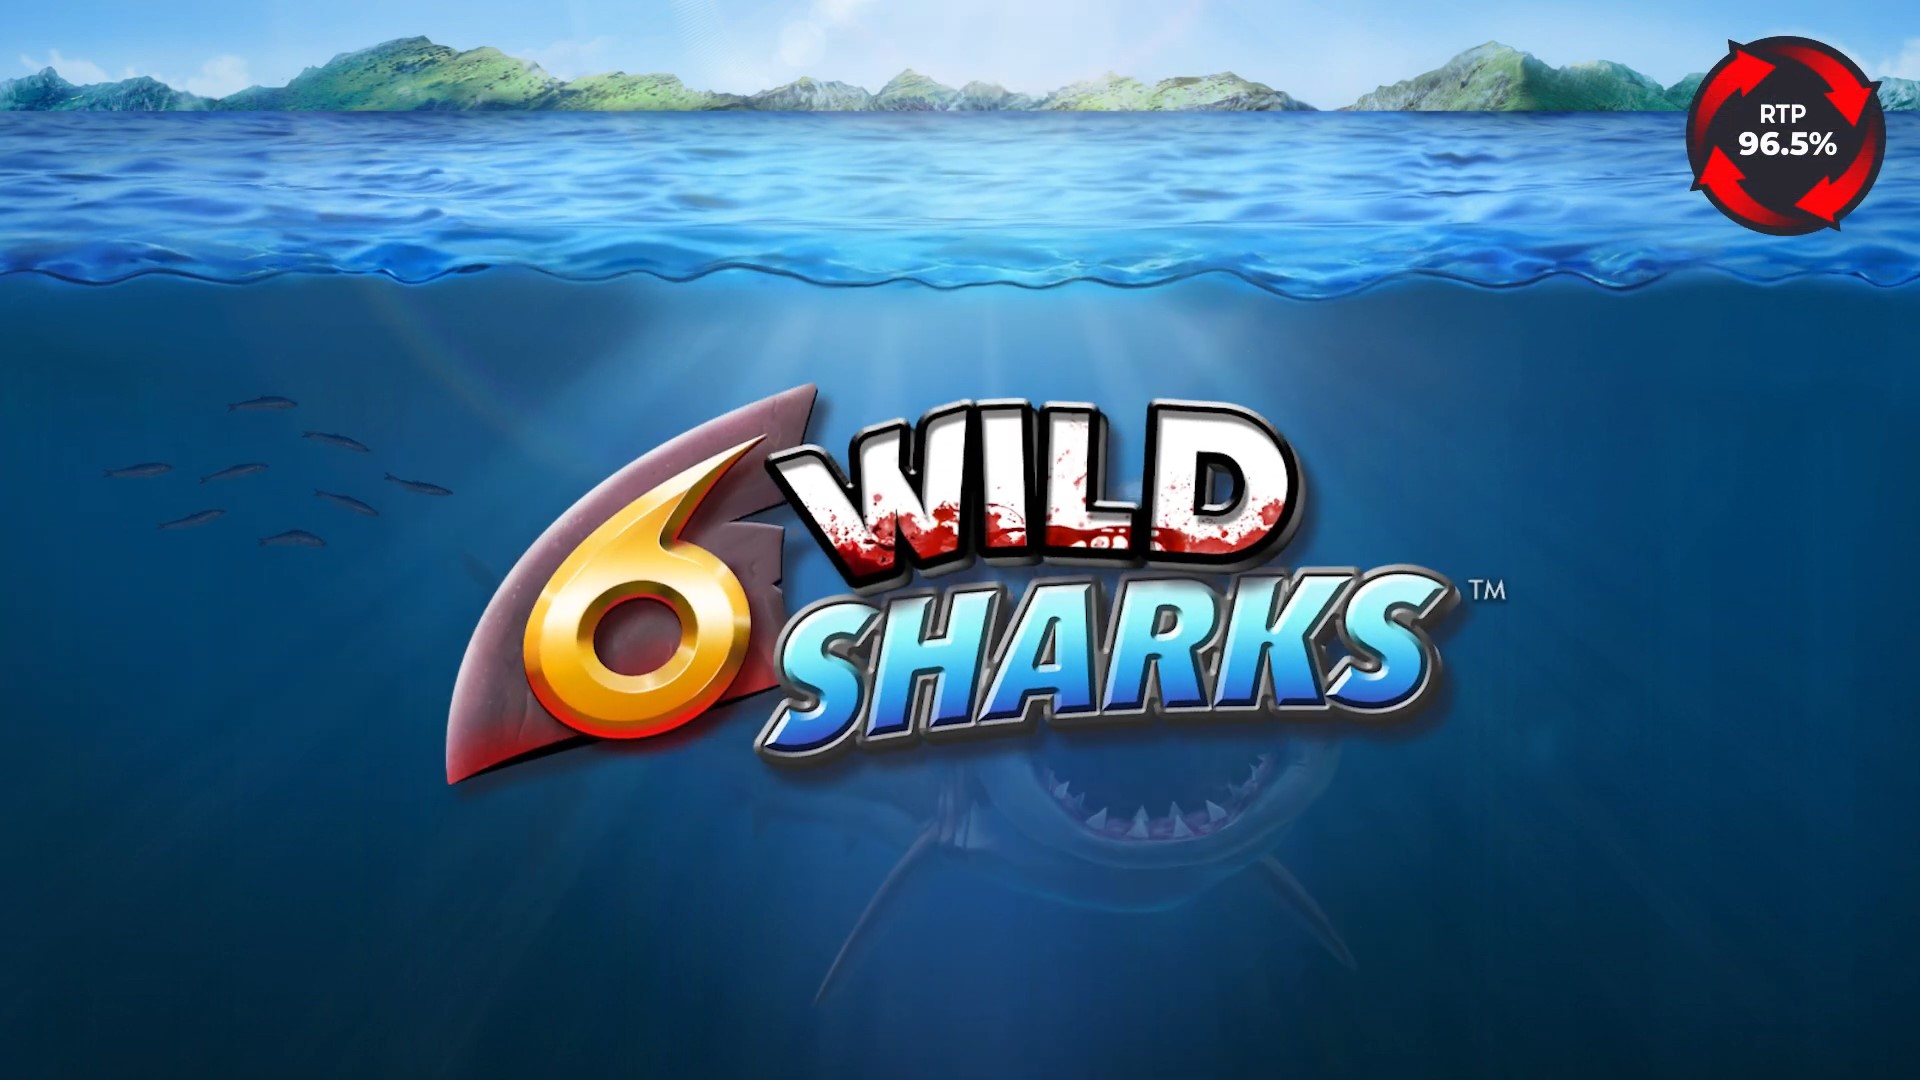 6 Wild Sharks logo 4ThePlayer